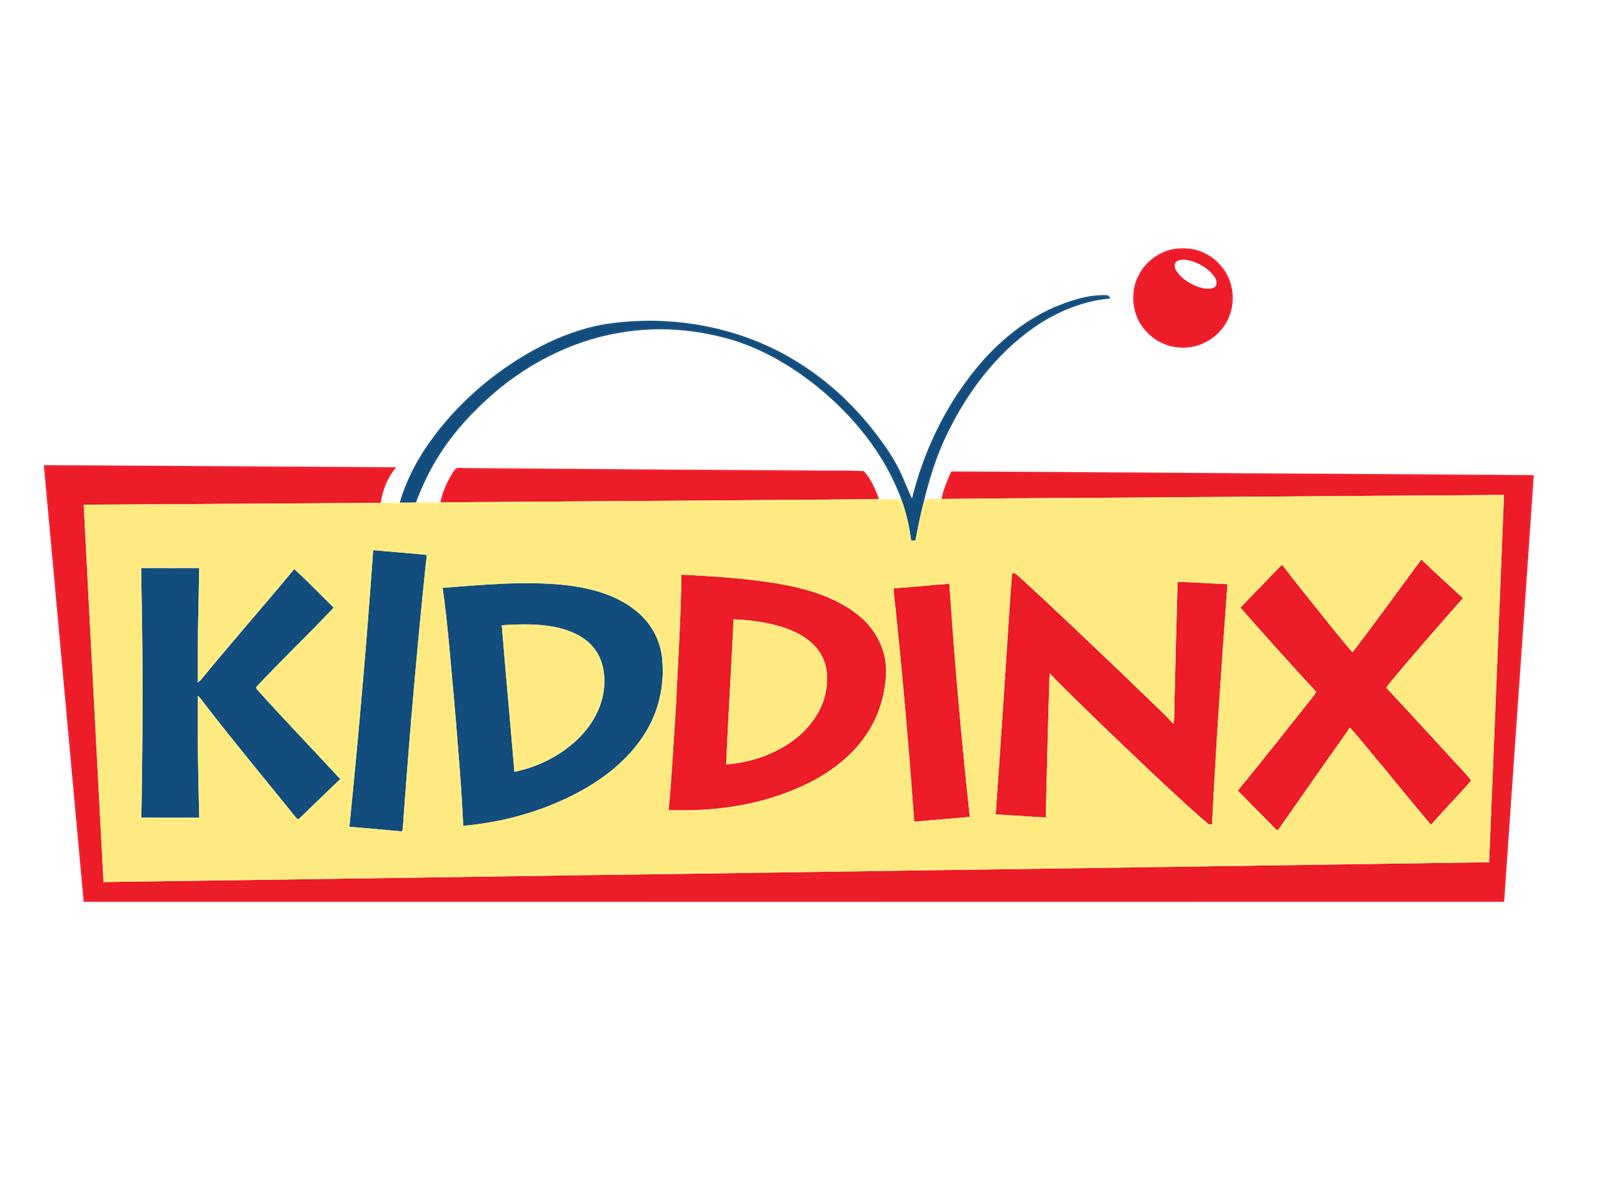 Kiddinx Media GmbH